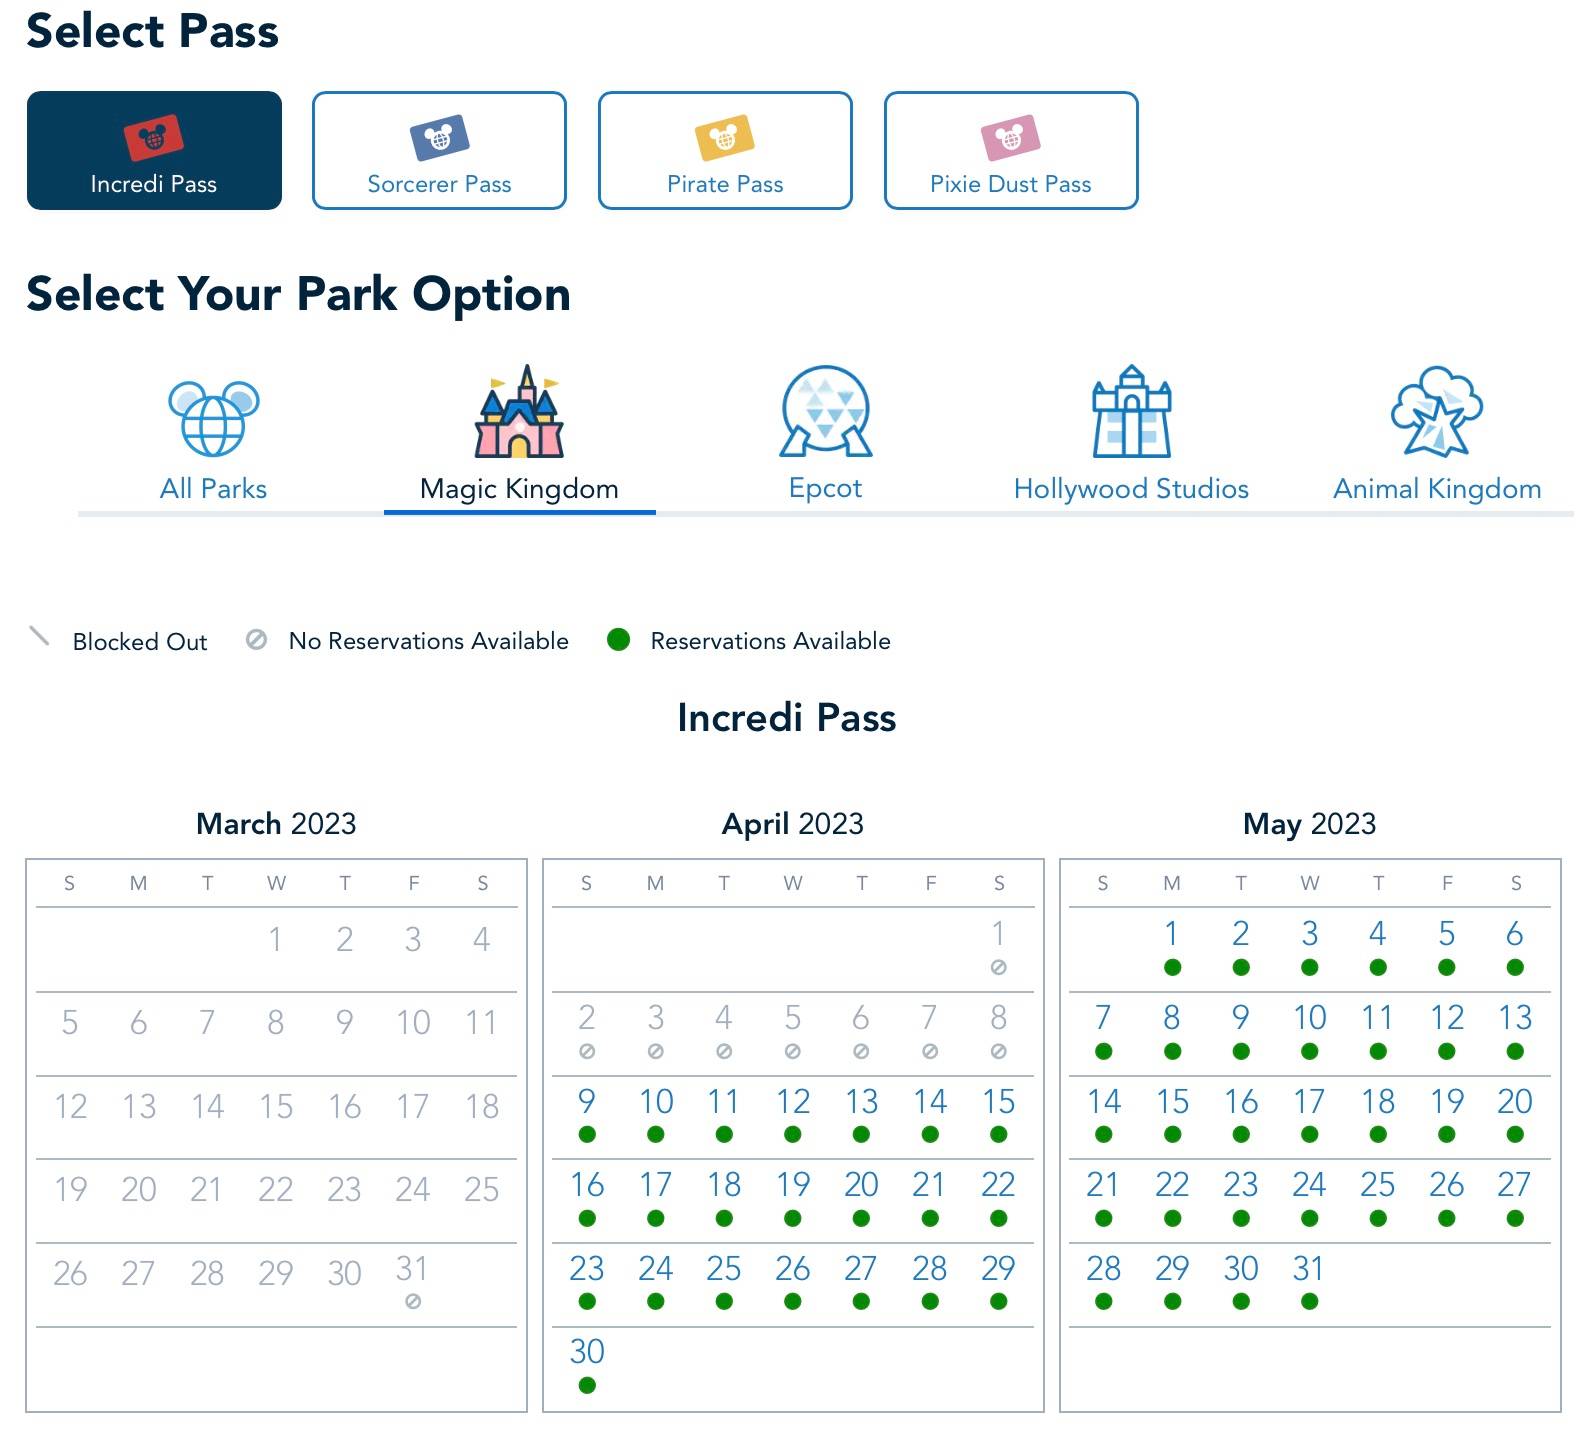 Disney Park Pass availability - April 2023